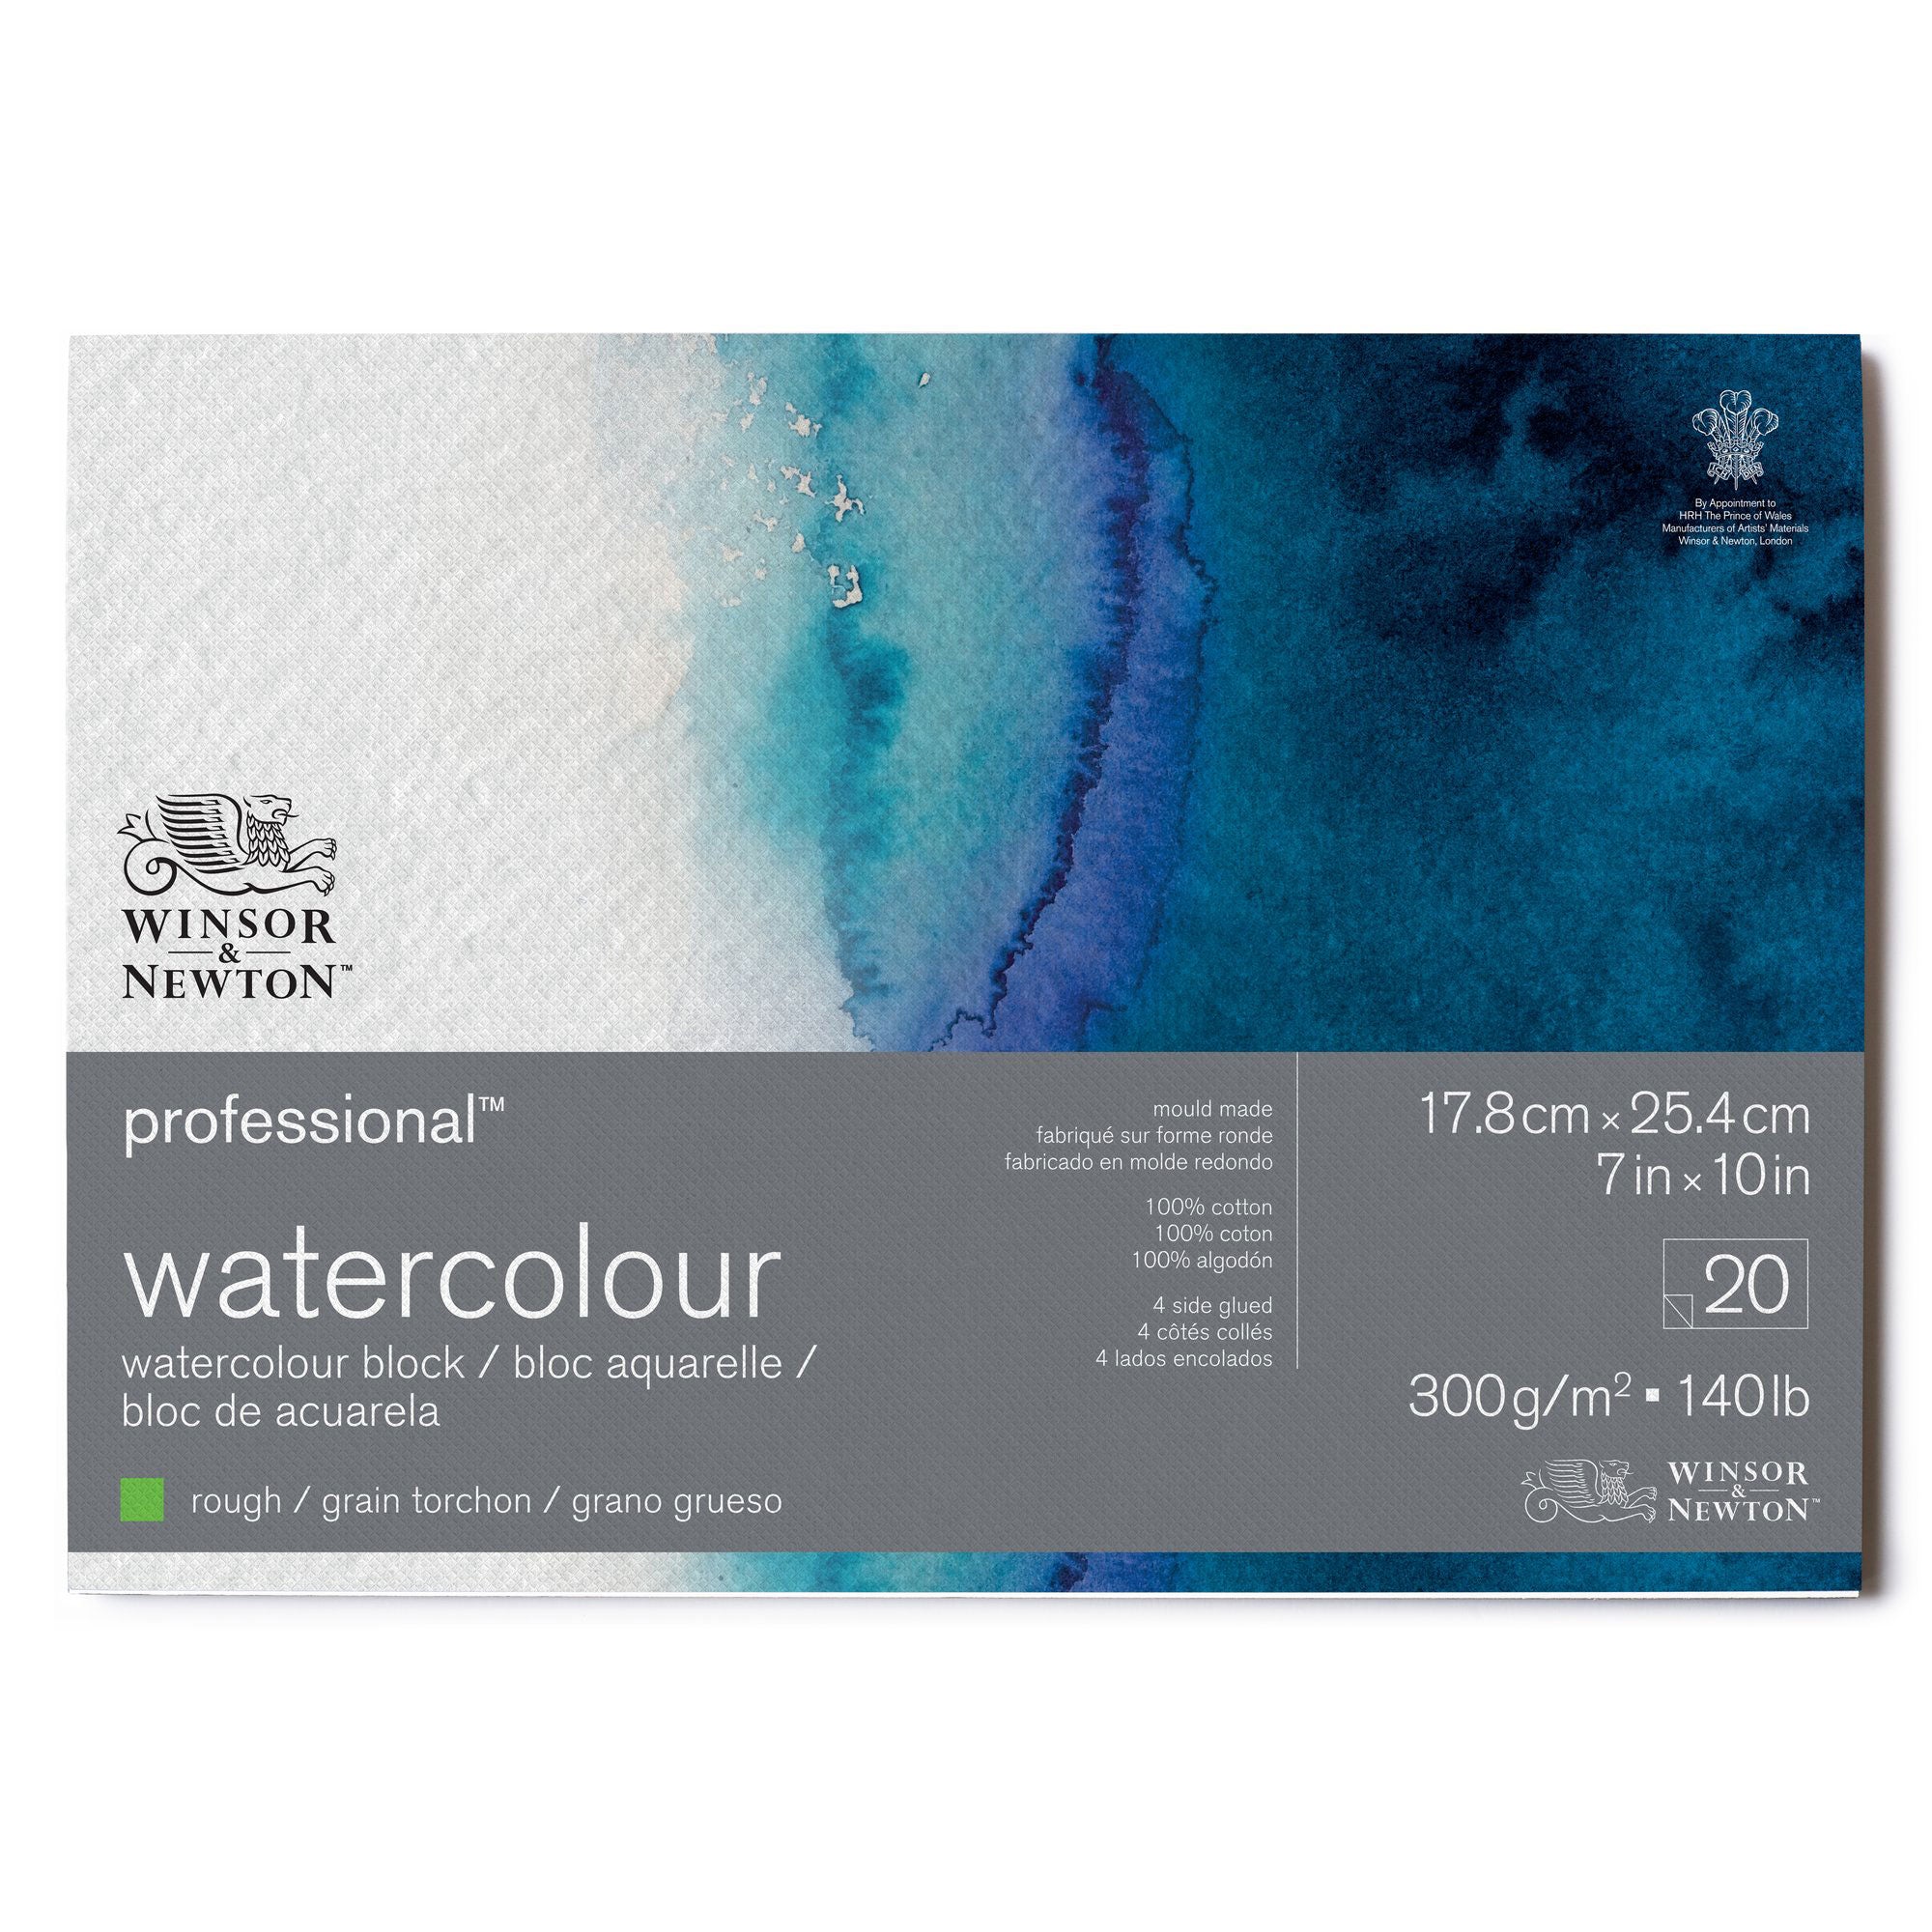 Winsor & Newton Professional Watercolour Block 300gsm/ 140Ib 20 Sheets - Rough